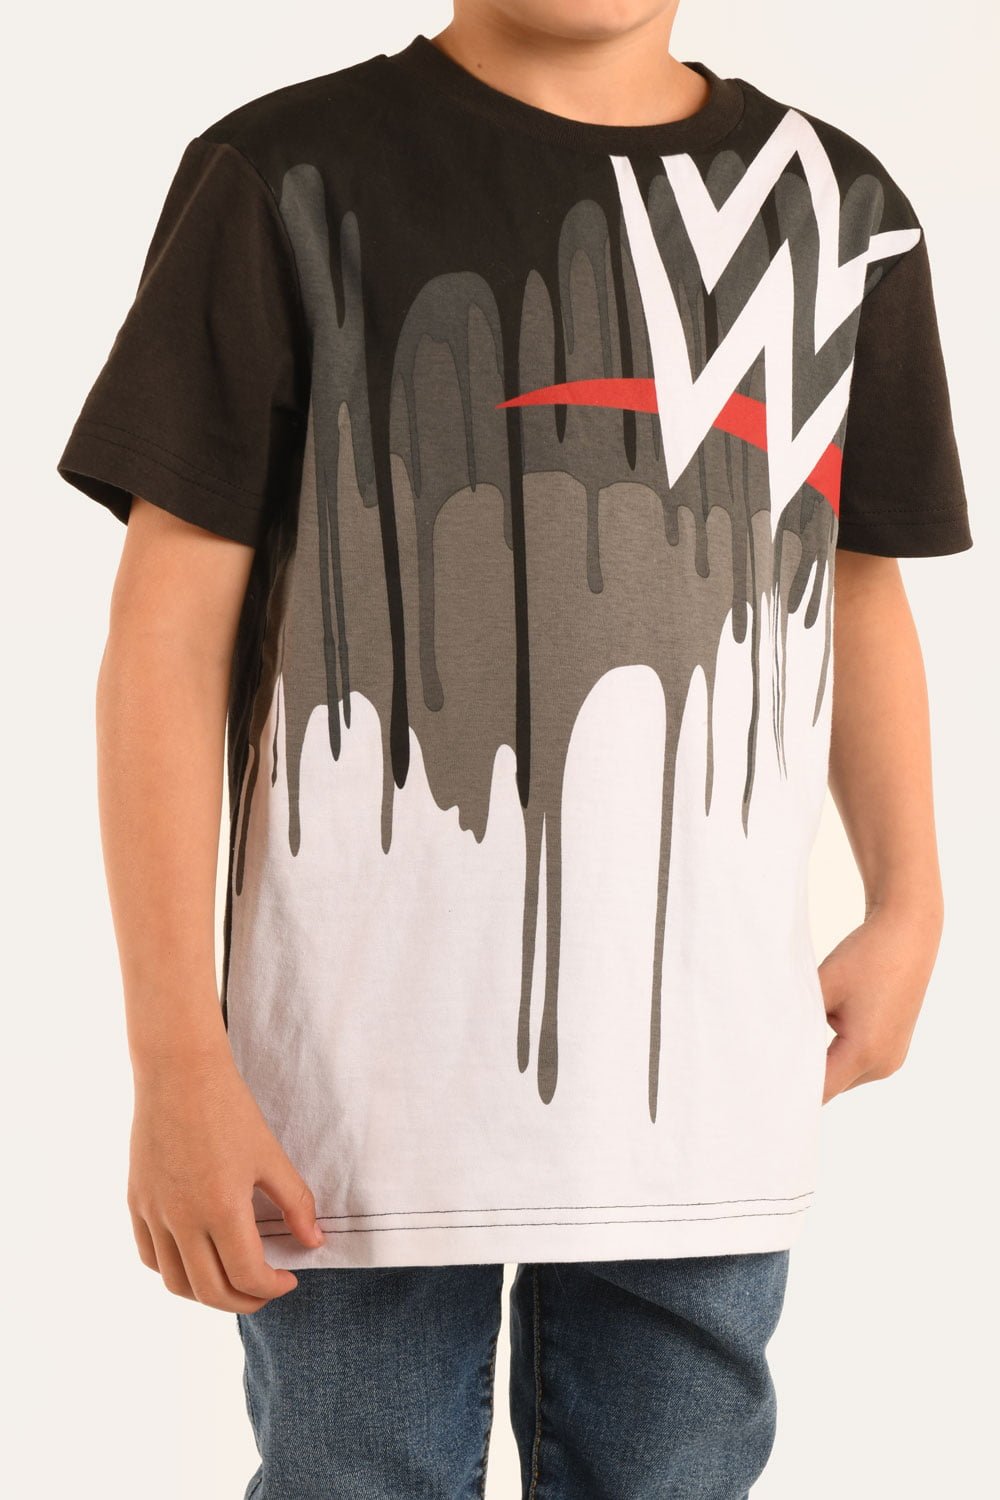 WWE BCI Cotton T-Shirt - Brand Threads